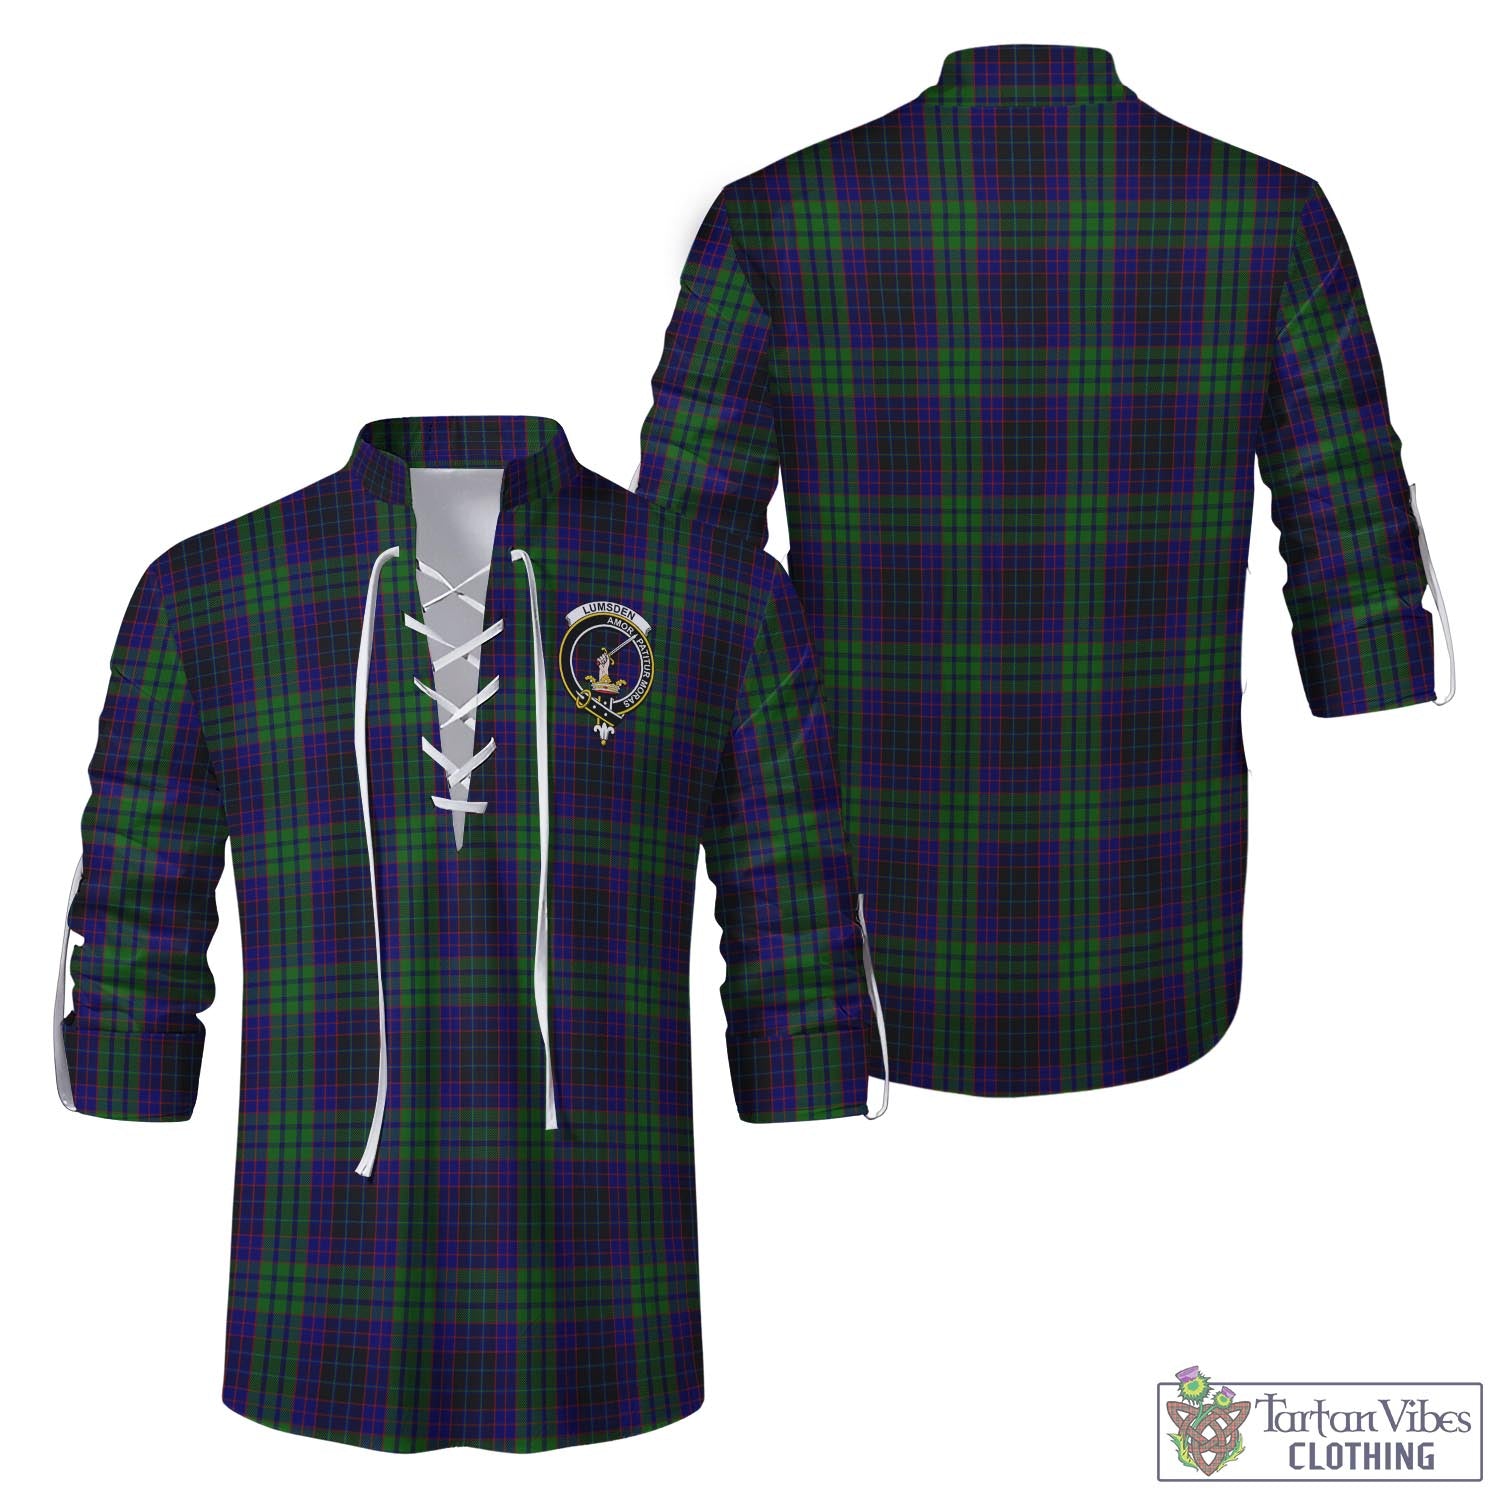 Tartan Vibes Clothing Lumsden Green Tartan Men's Scottish Traditional Jacobite Ghillie Kilt Shirt with Family Crest